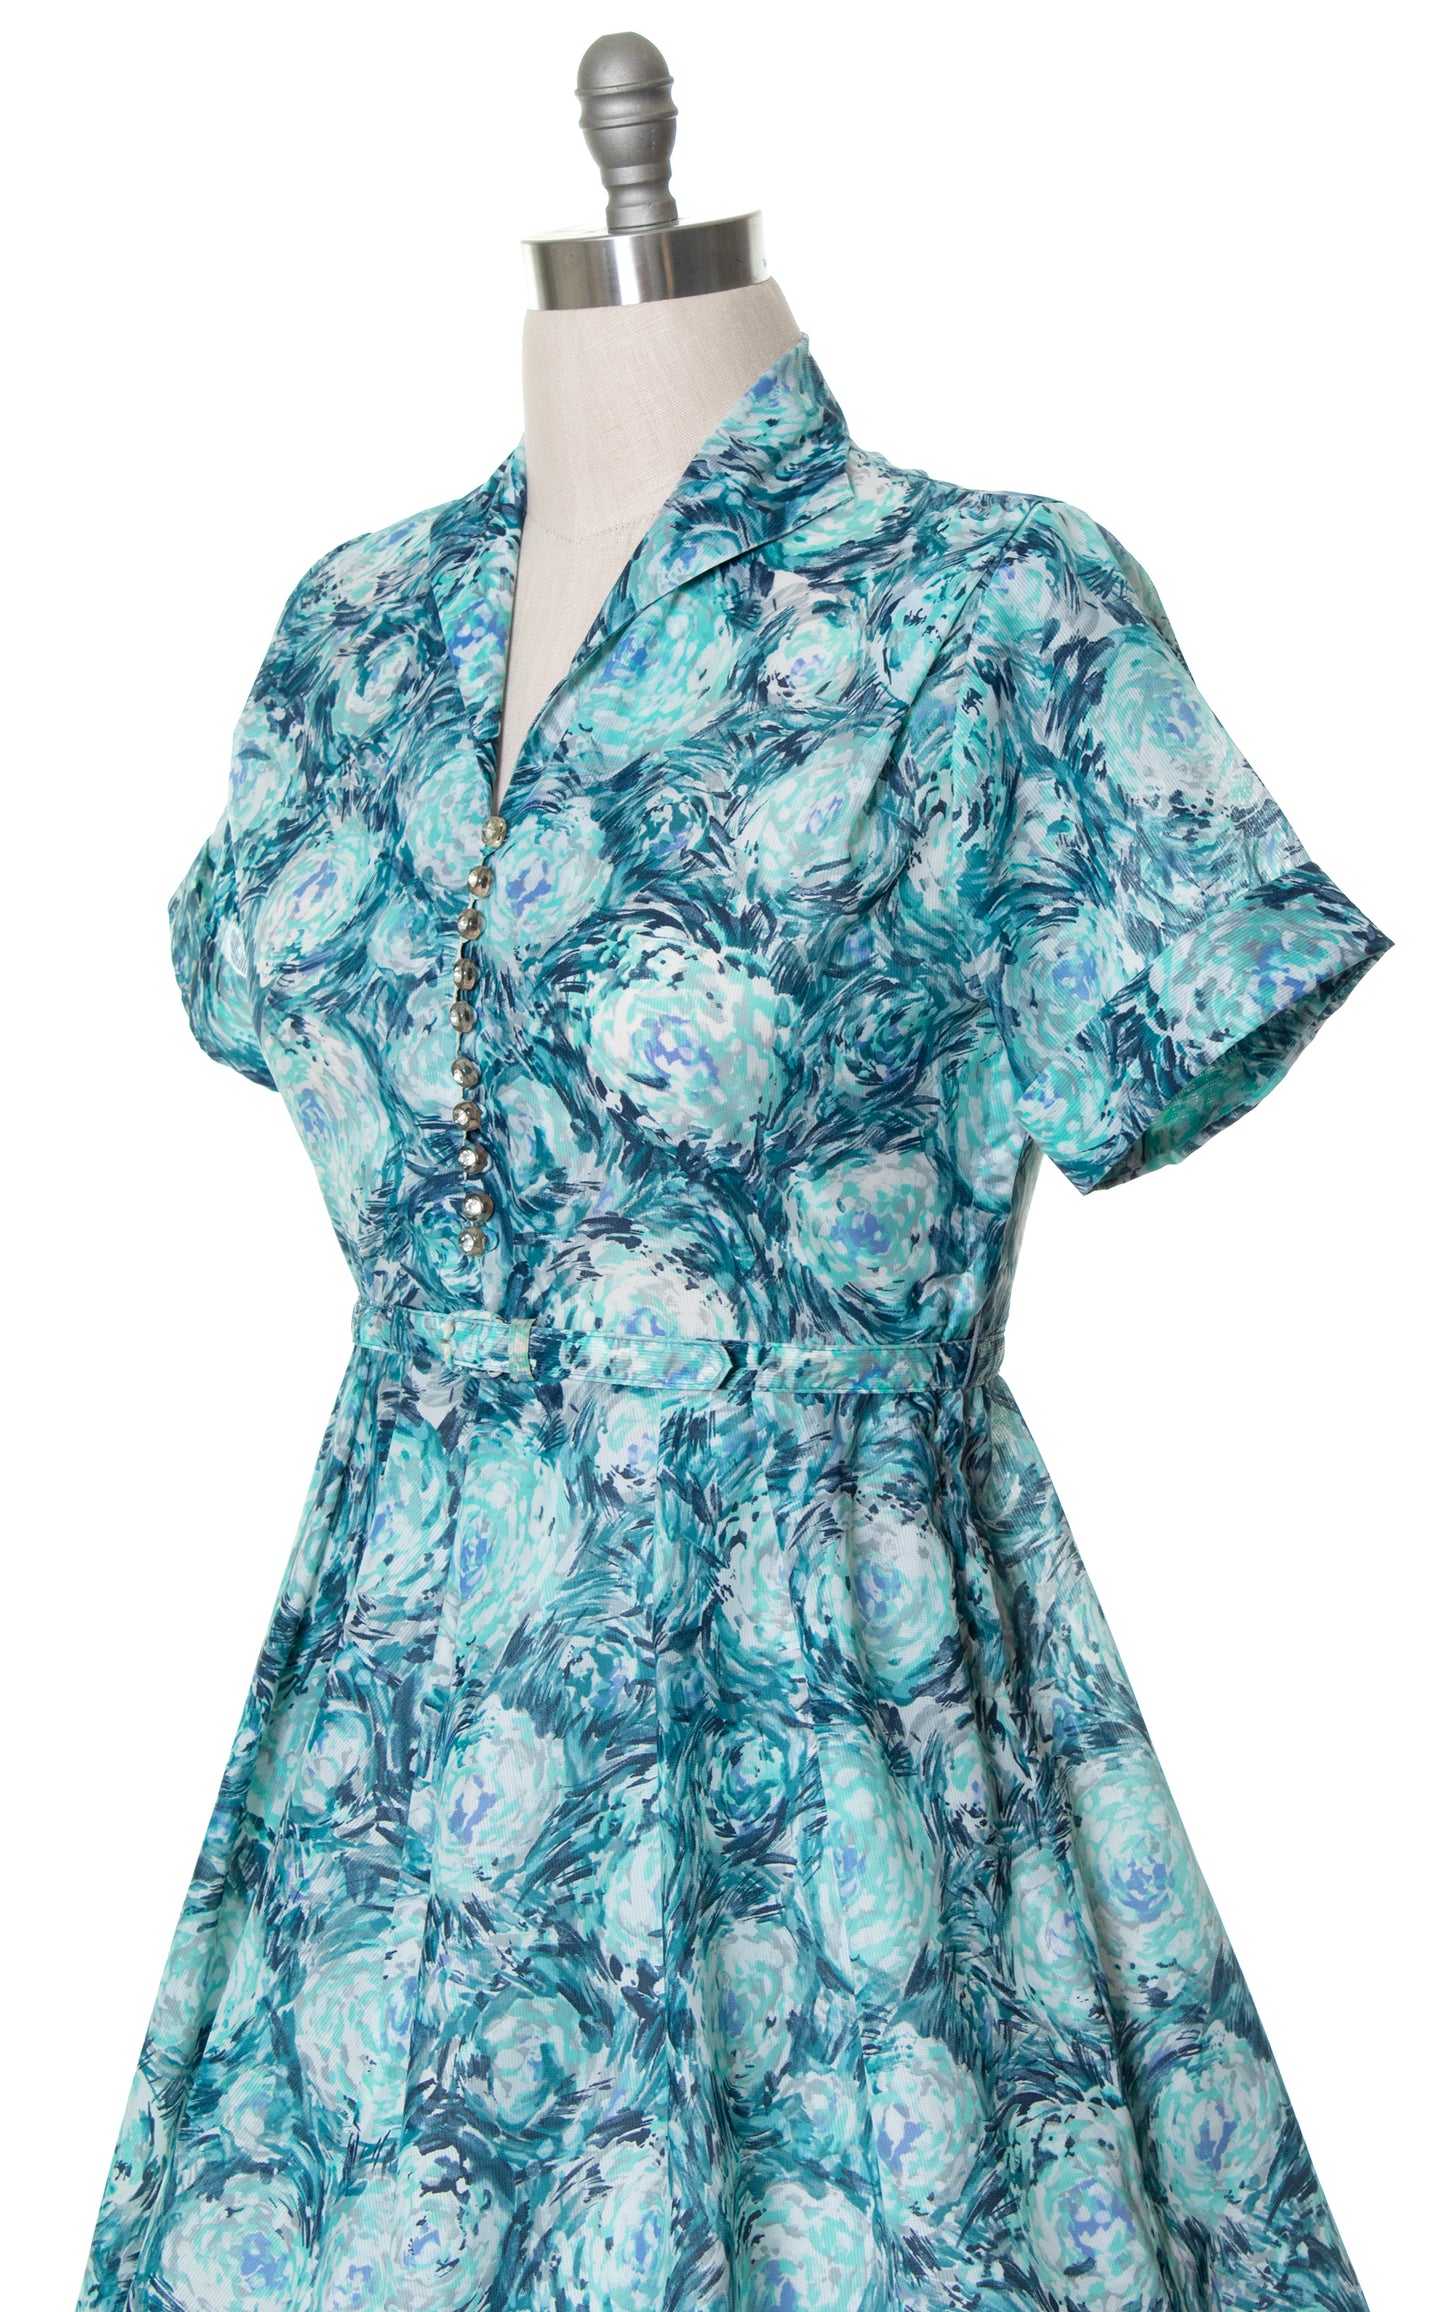 Vintage 50s 1950s Blue Sheer Floral Shirtwaist Dress Fit and Flare BirthdayLifeVintage